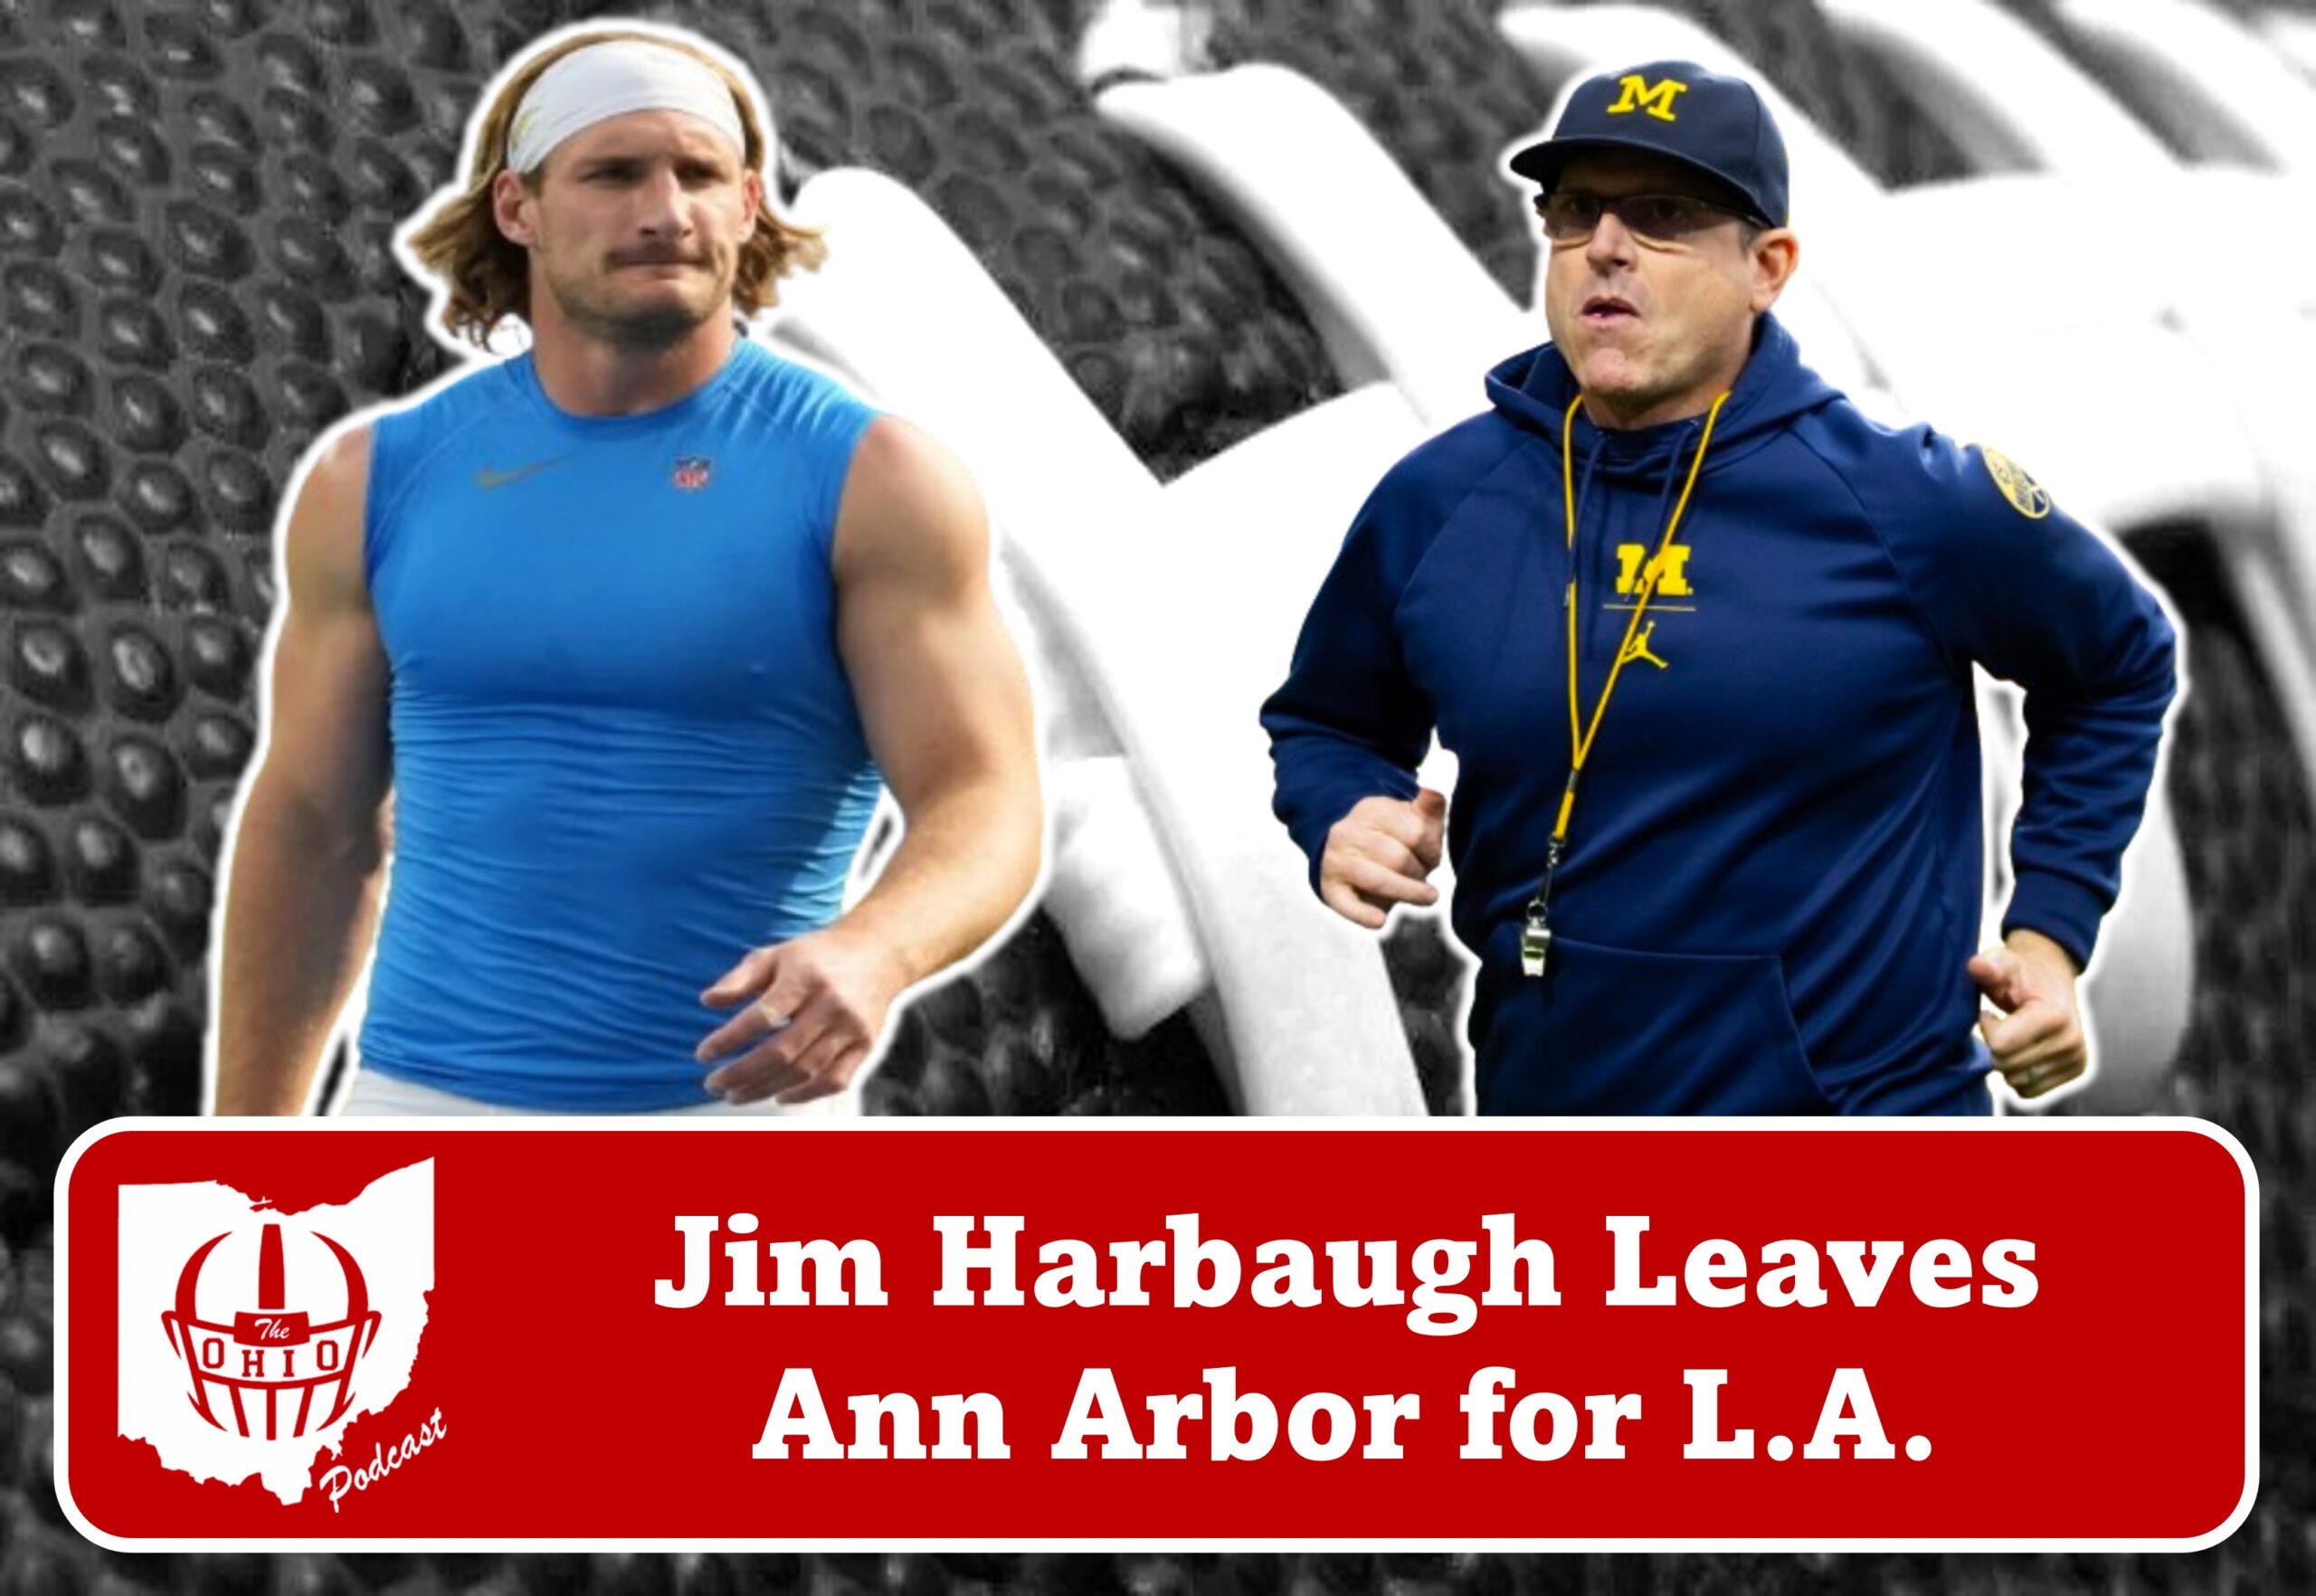 Jim Harbaugh Leaves Ann Arbor for L.A.